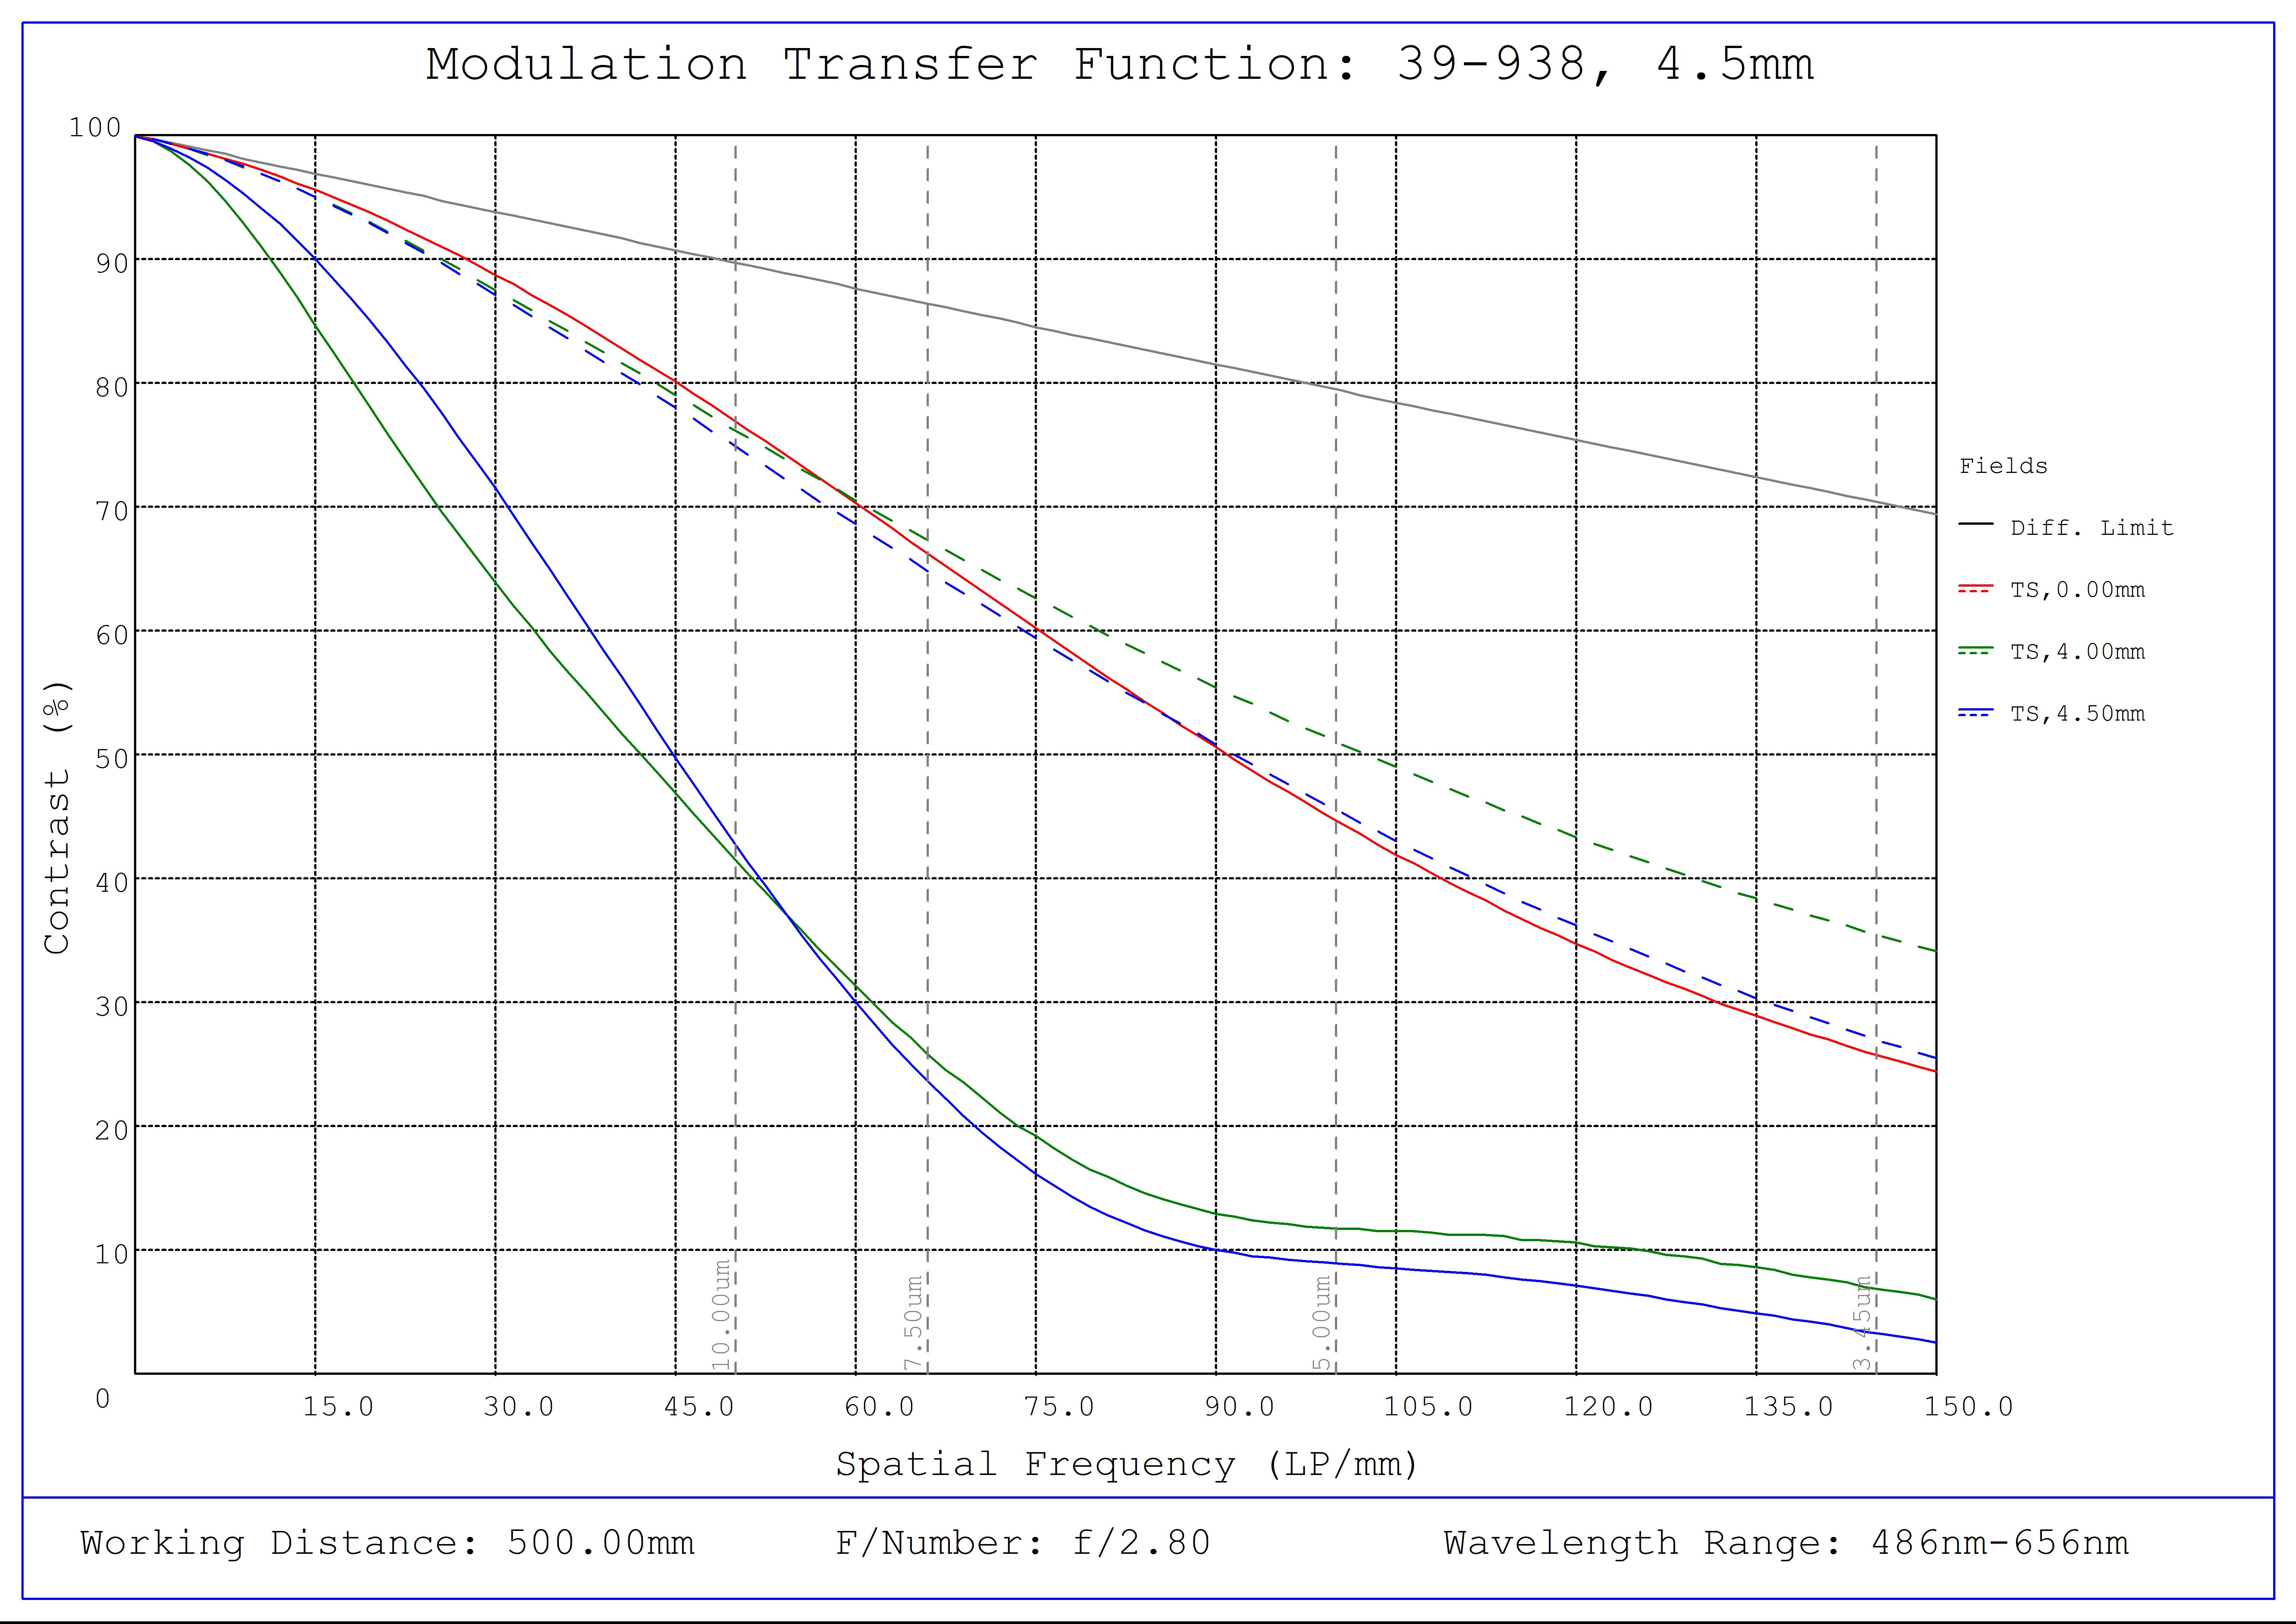 #39-938, 4.5mm C VIS-NIR Series Fixed Focal Length Lens, Modulated Transfer Function (MTF) Plot, 500mm Working Distance, f2.8